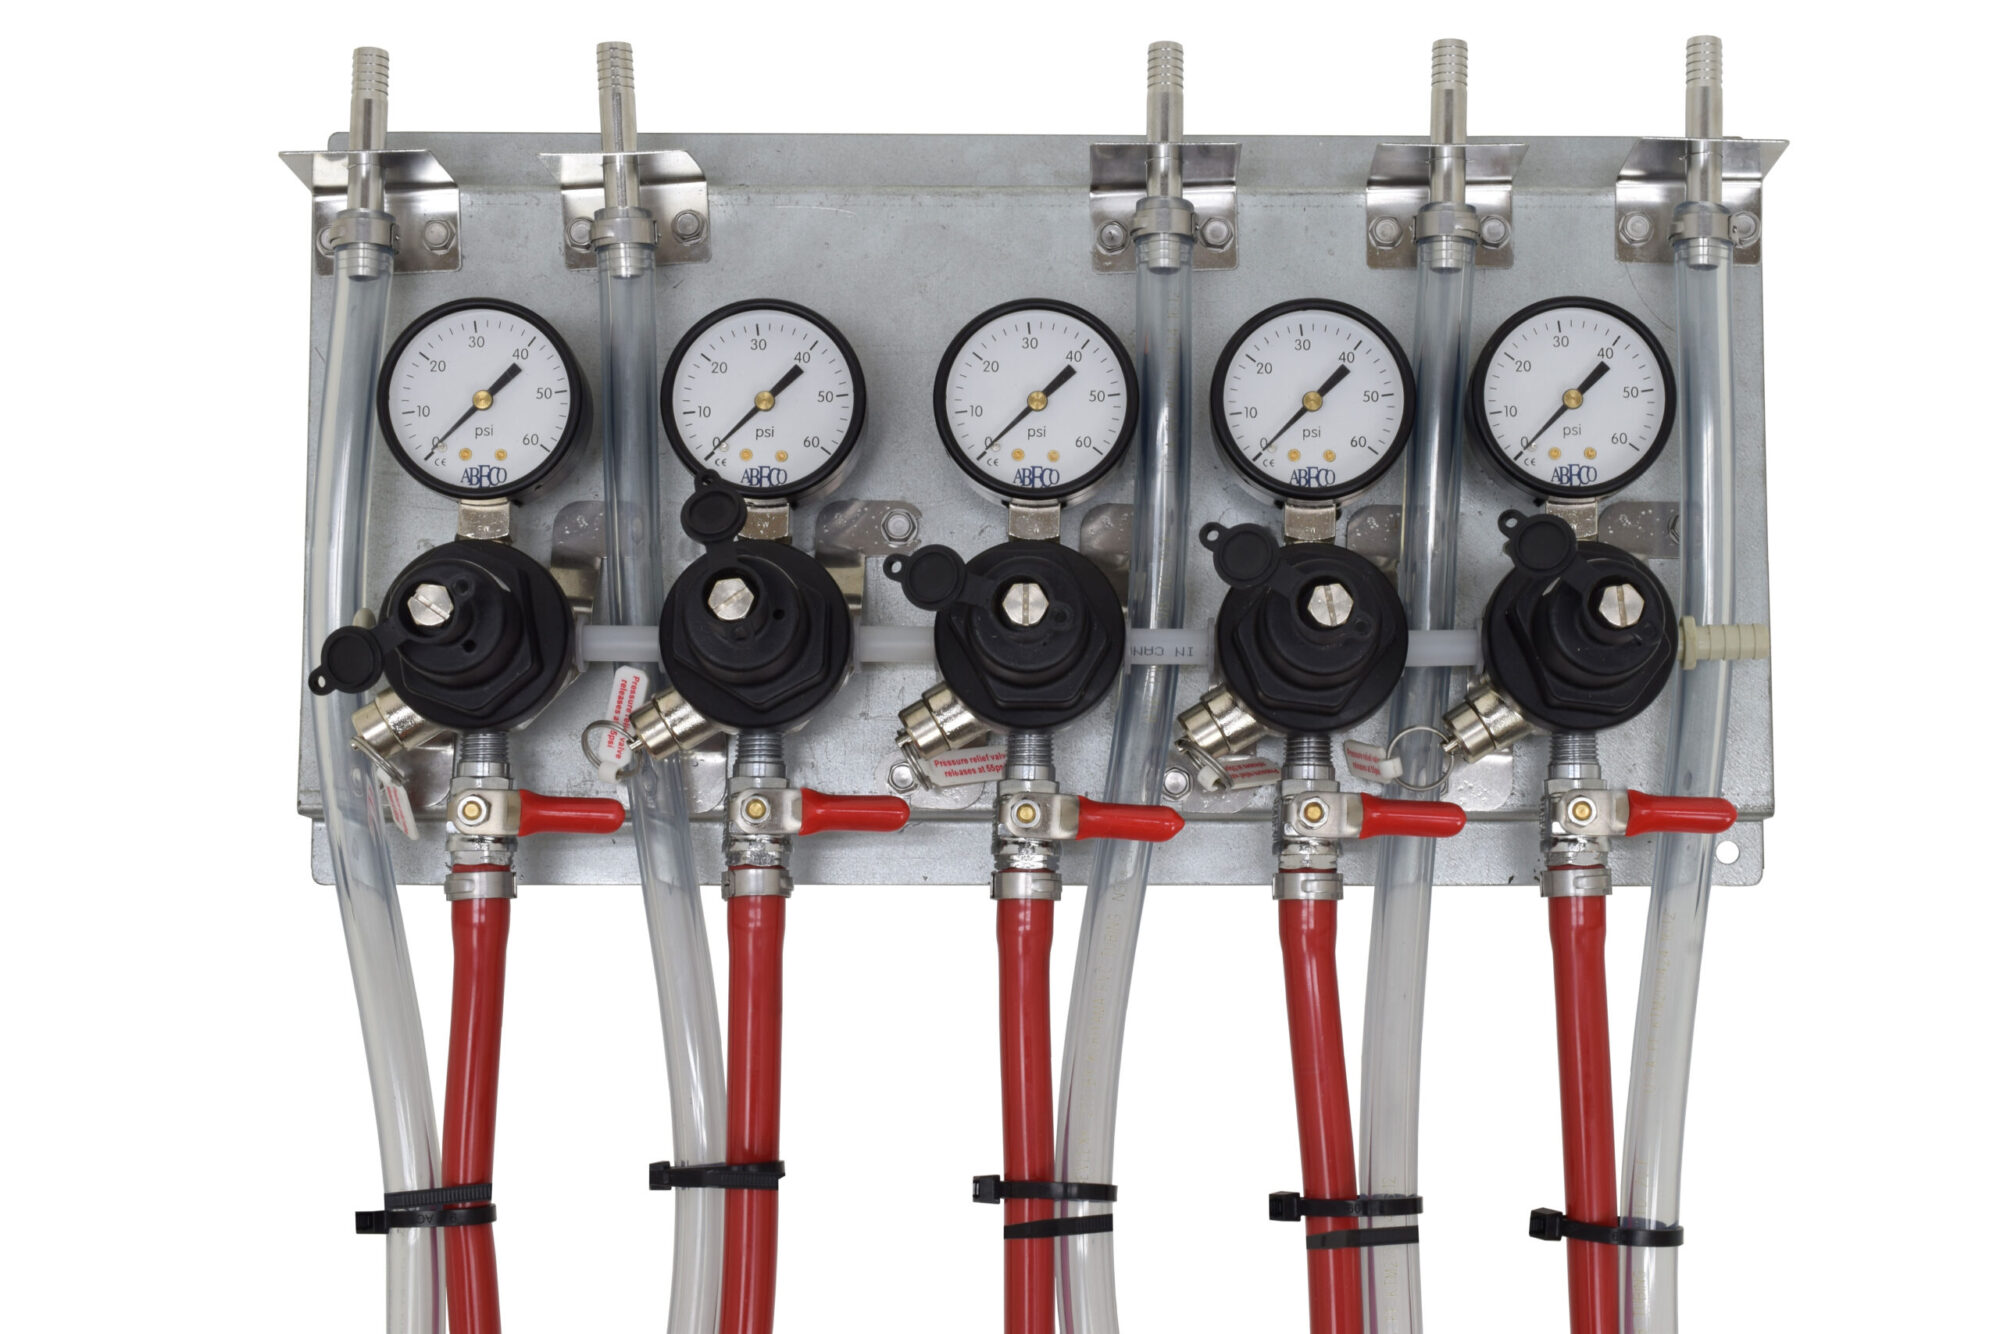 2705PH Five Pressure Regulator Panel With TecFlo Regulators and 8' Hose kits